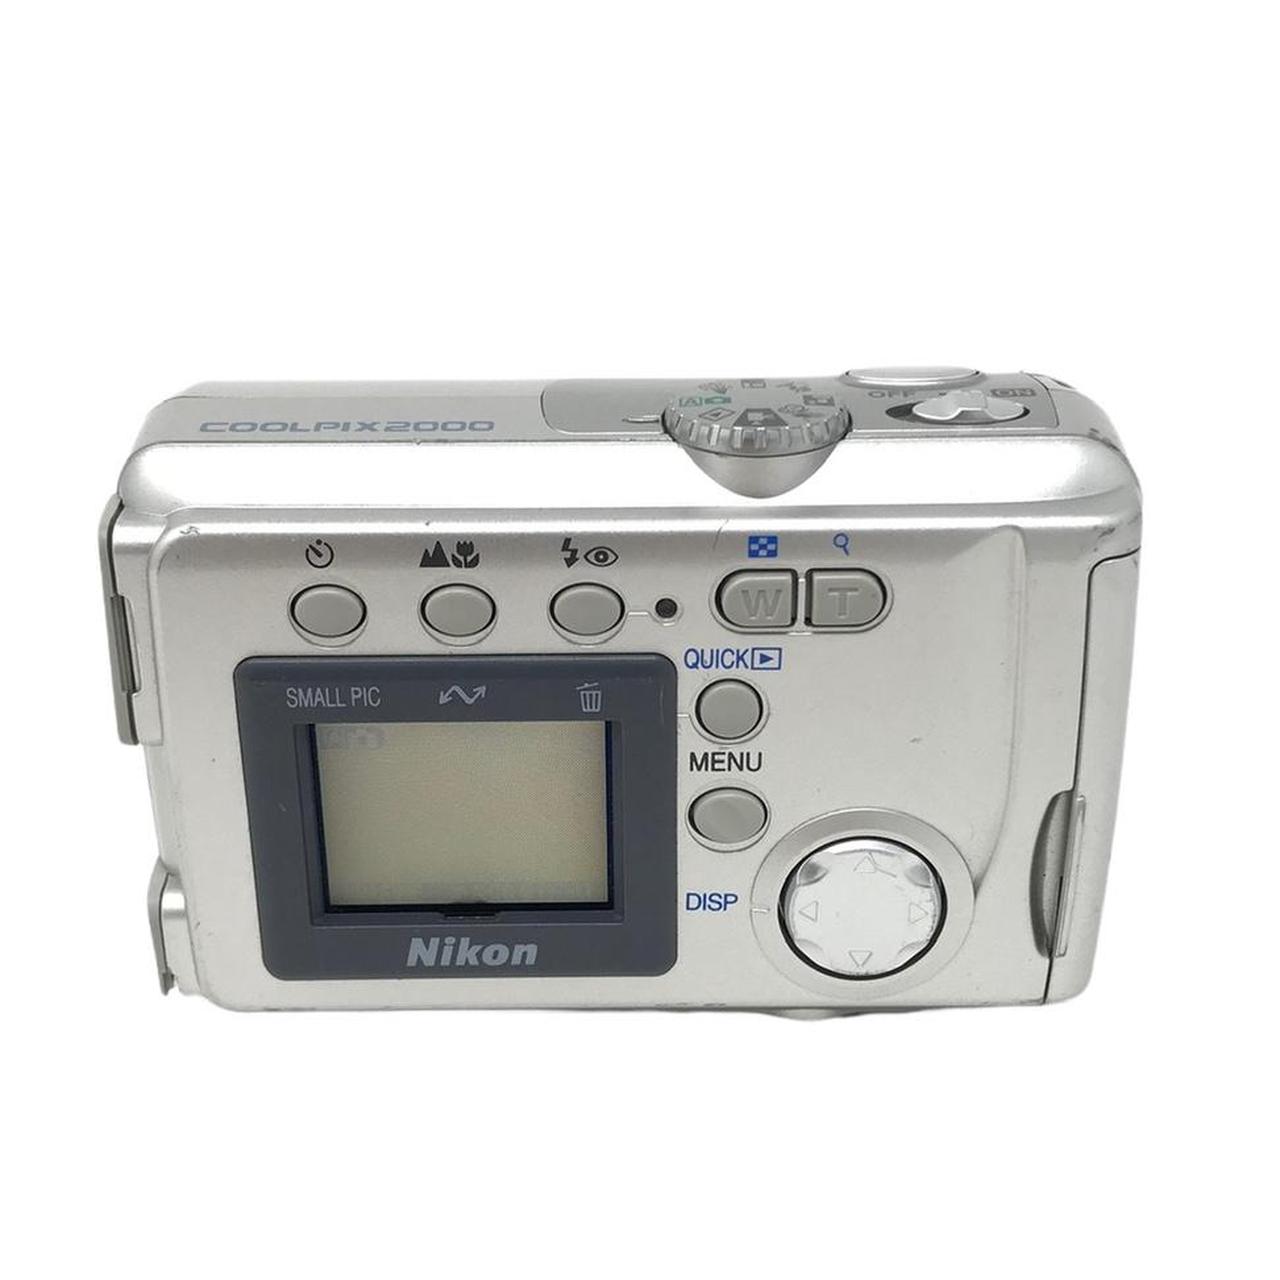 Product Image 3 - Nikon Coolpix 2000 Digital Camera

Comes